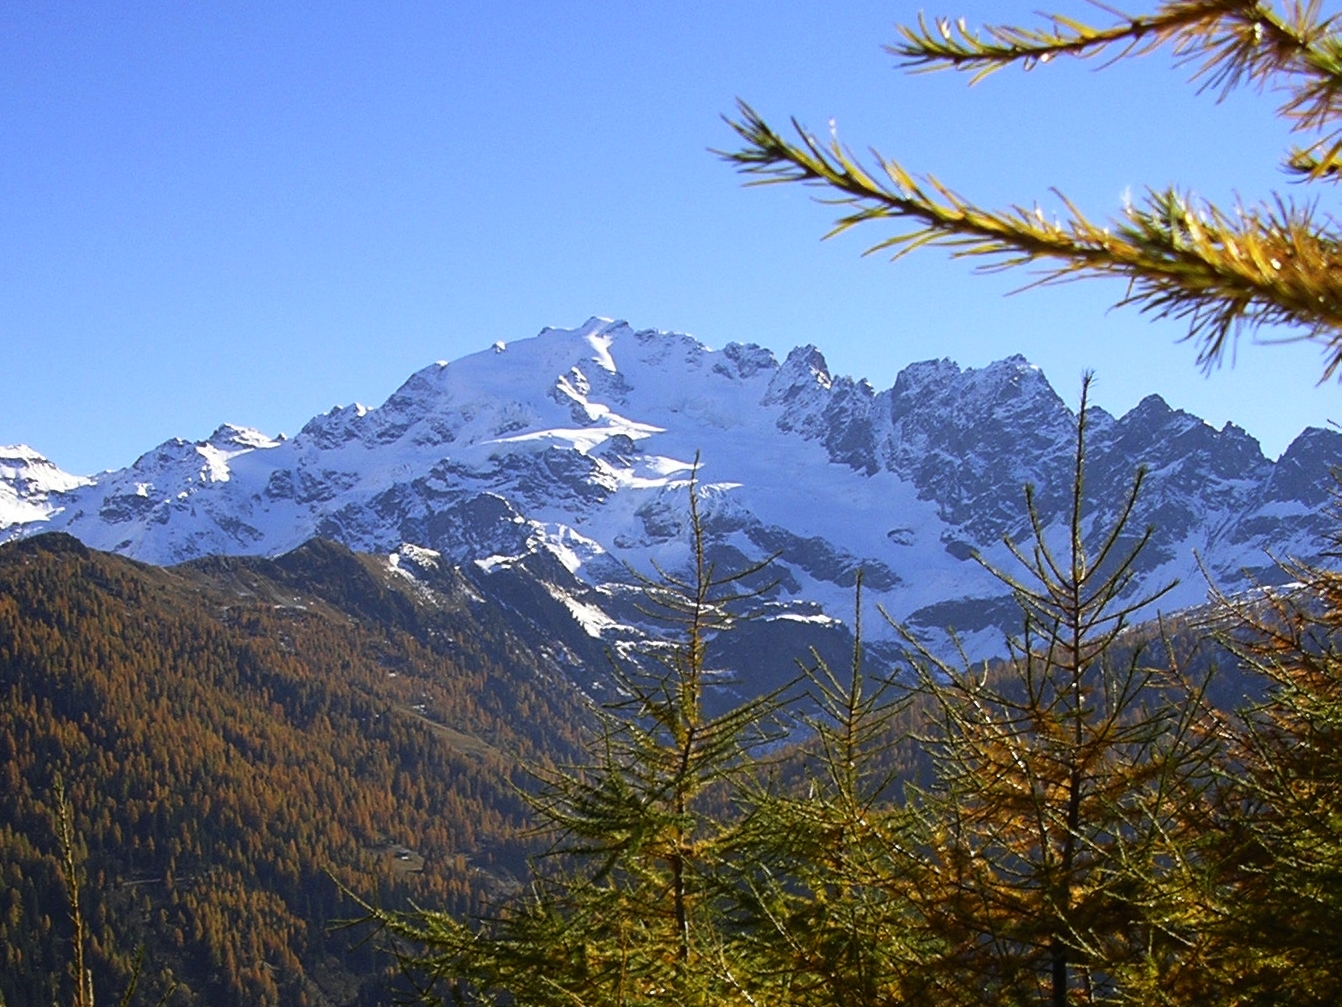 engl. Cima de’ Piazzi (3,439 m)